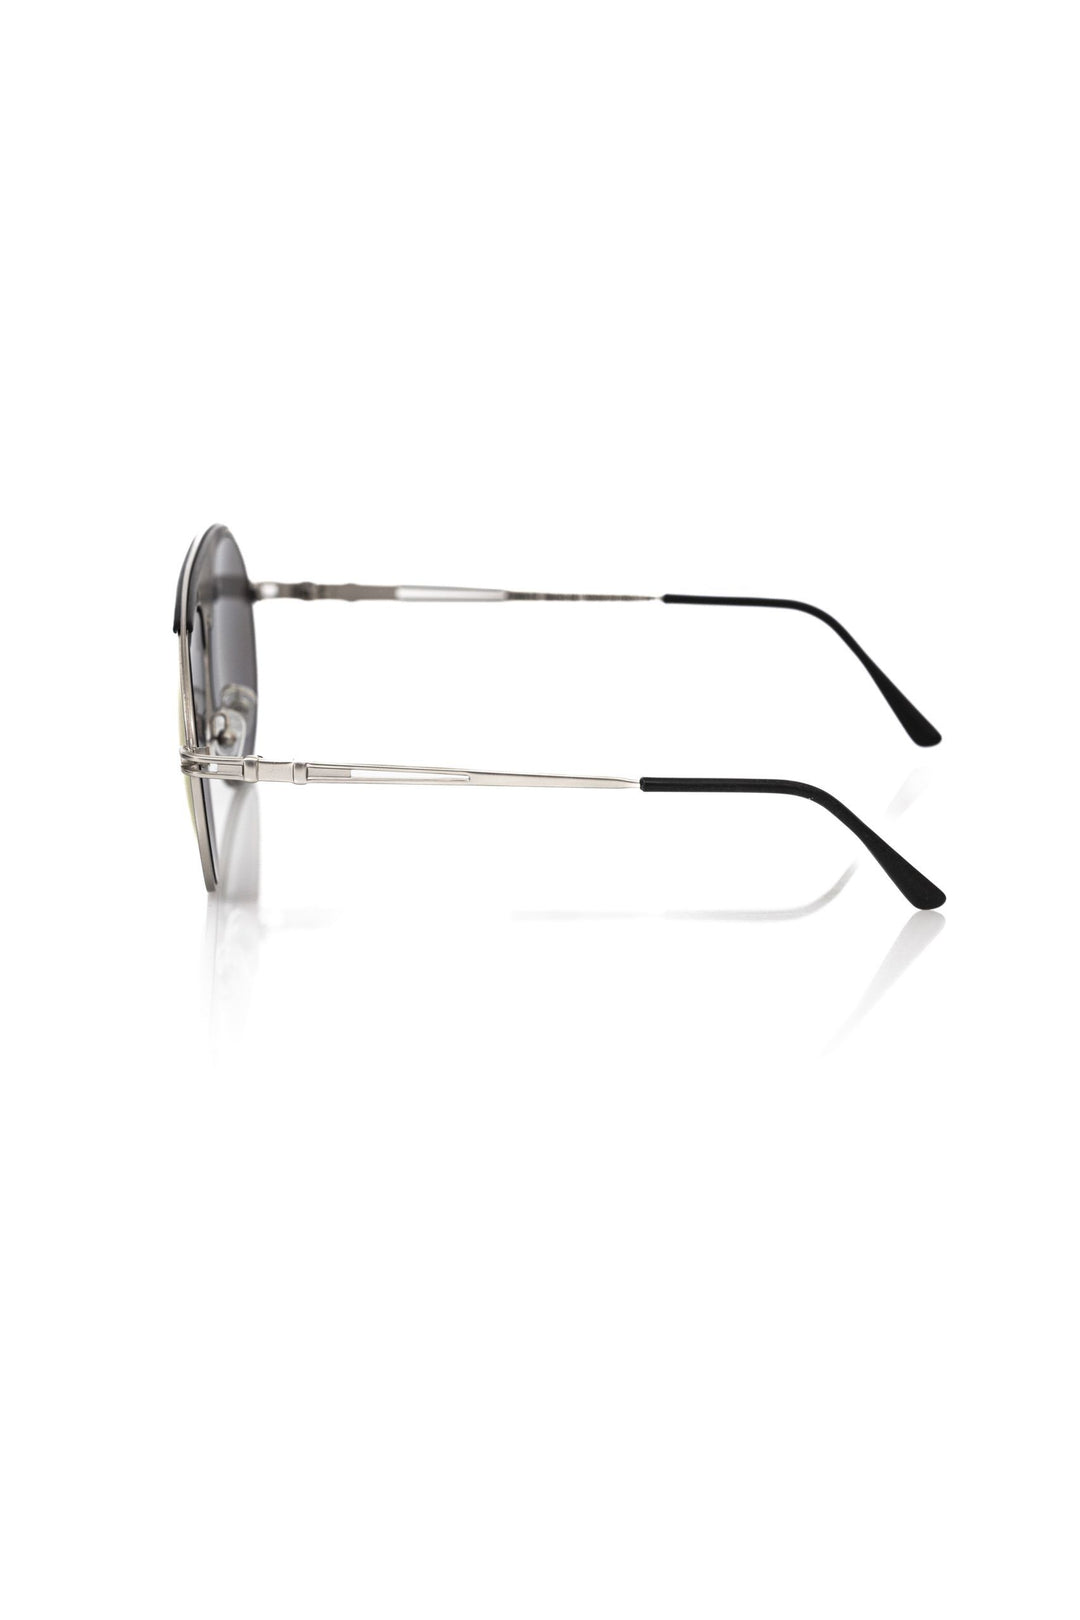 Frankie Morello Chic Shield Smoke Gray Lens Sunglasses